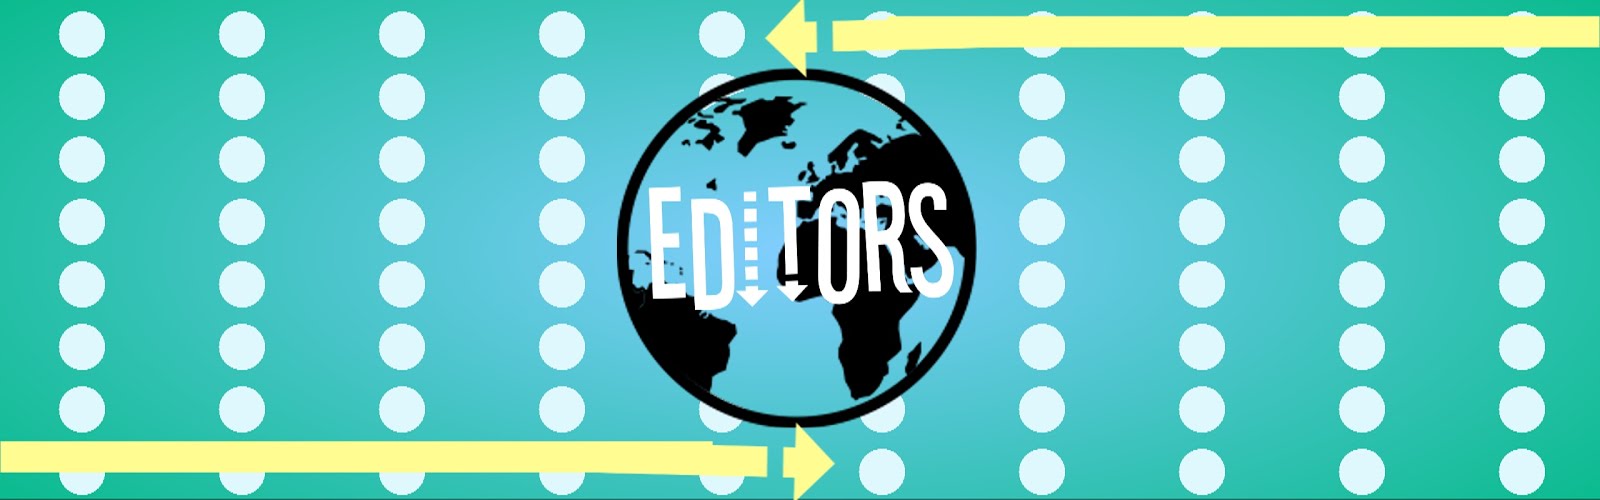 Editors Around The World